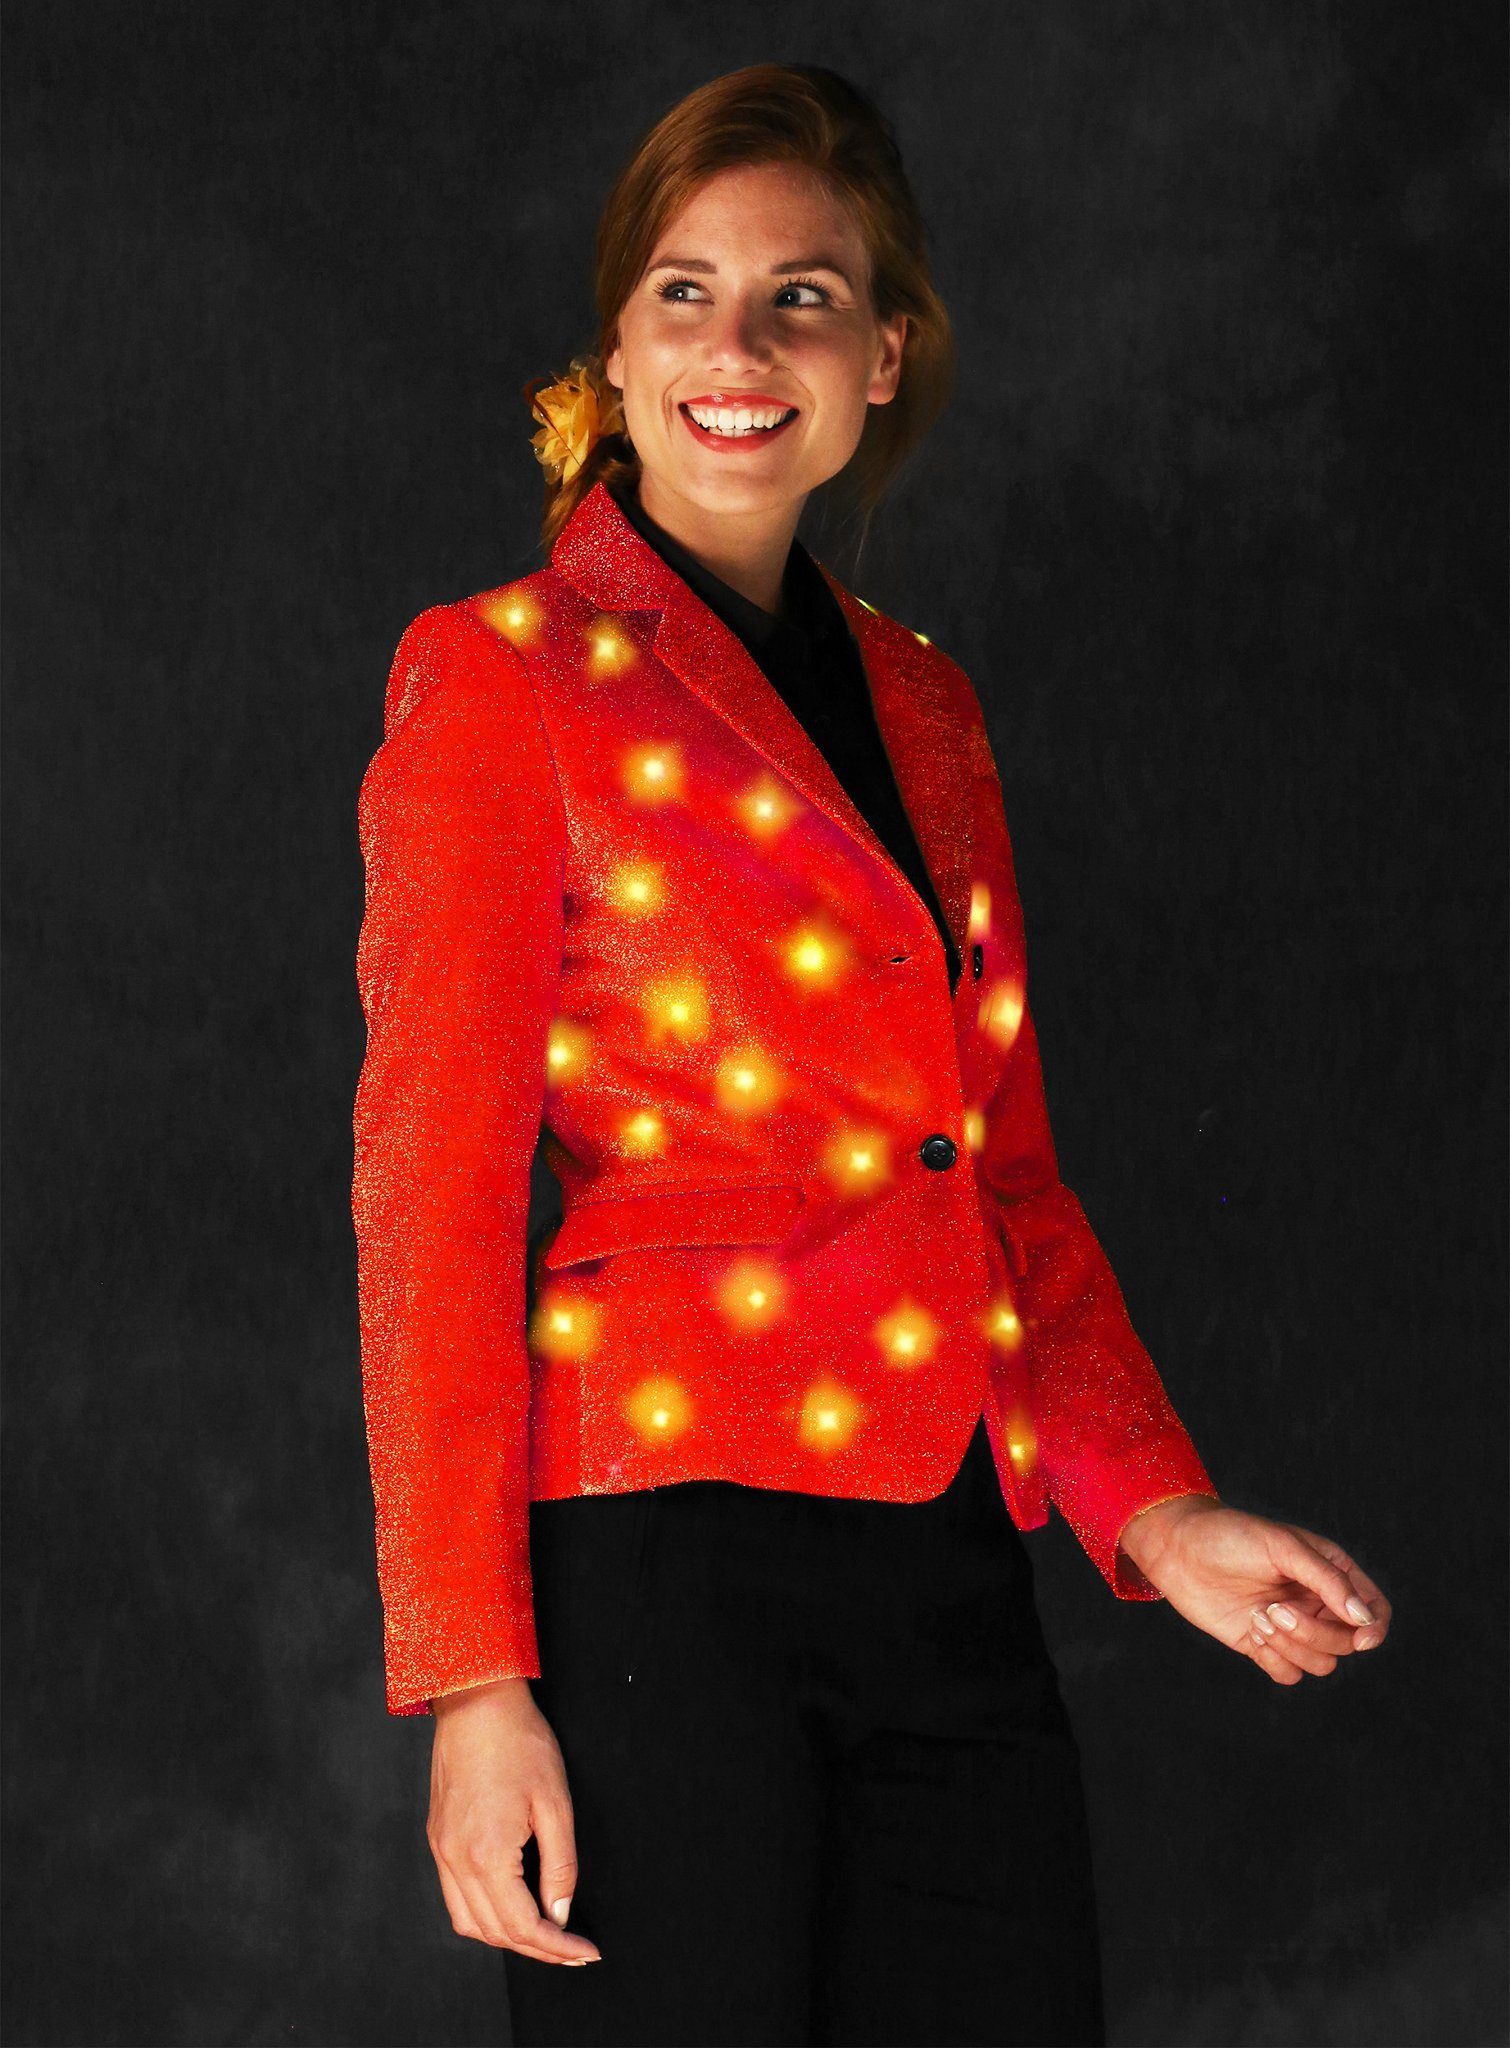 thetru Kostüm LED Damensakko rot, LED Kostüm Sakko mit Leuchtdioden